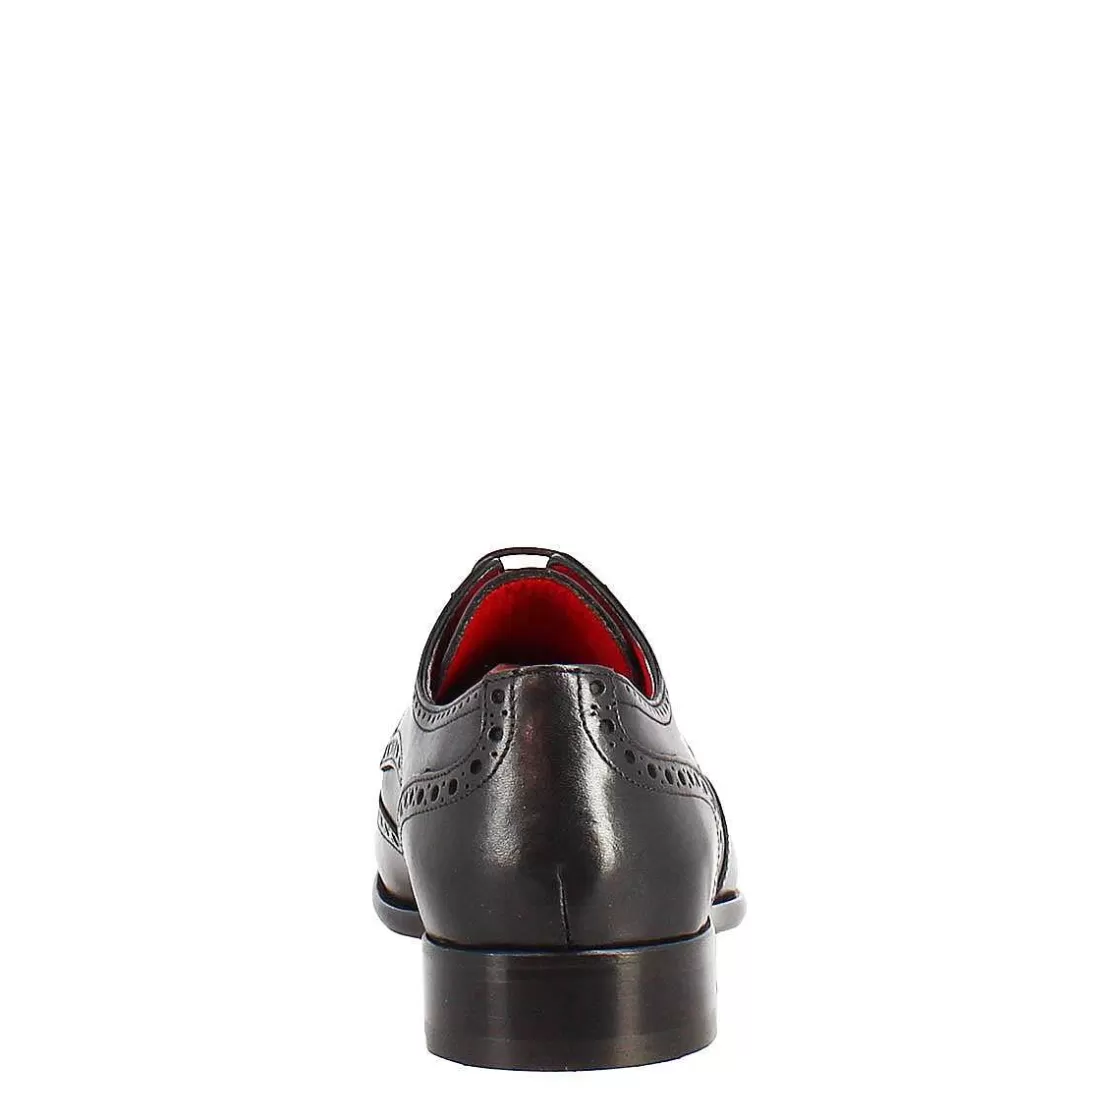 Leonardo Handmade Brogues Shoes For Men In Black Leather Online